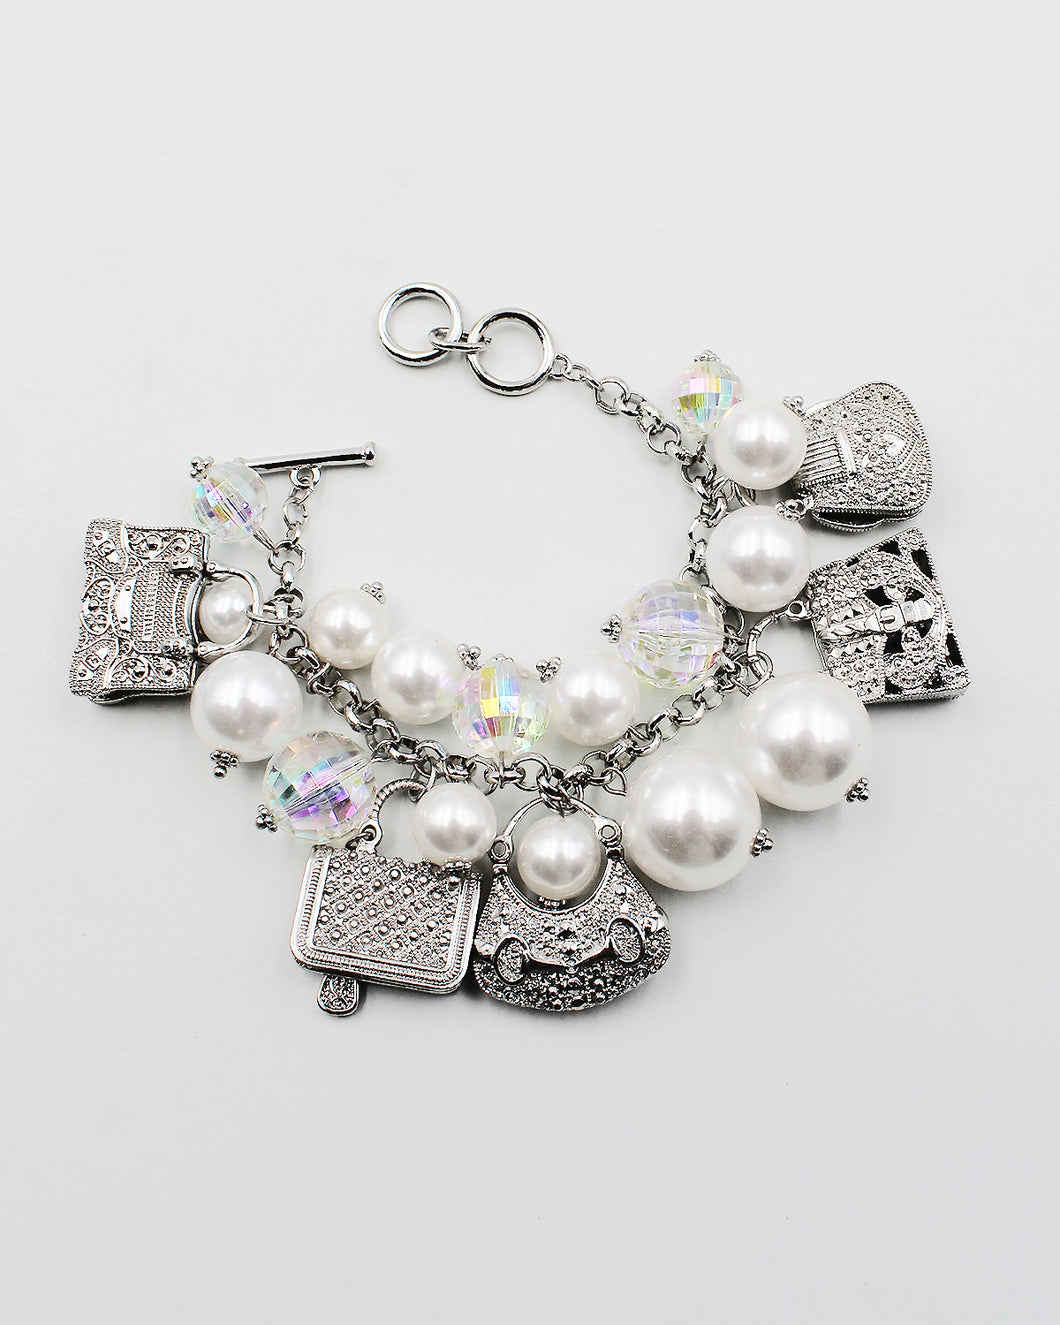 'Fashion Purse' Charm Bracelet with Pearl Beads